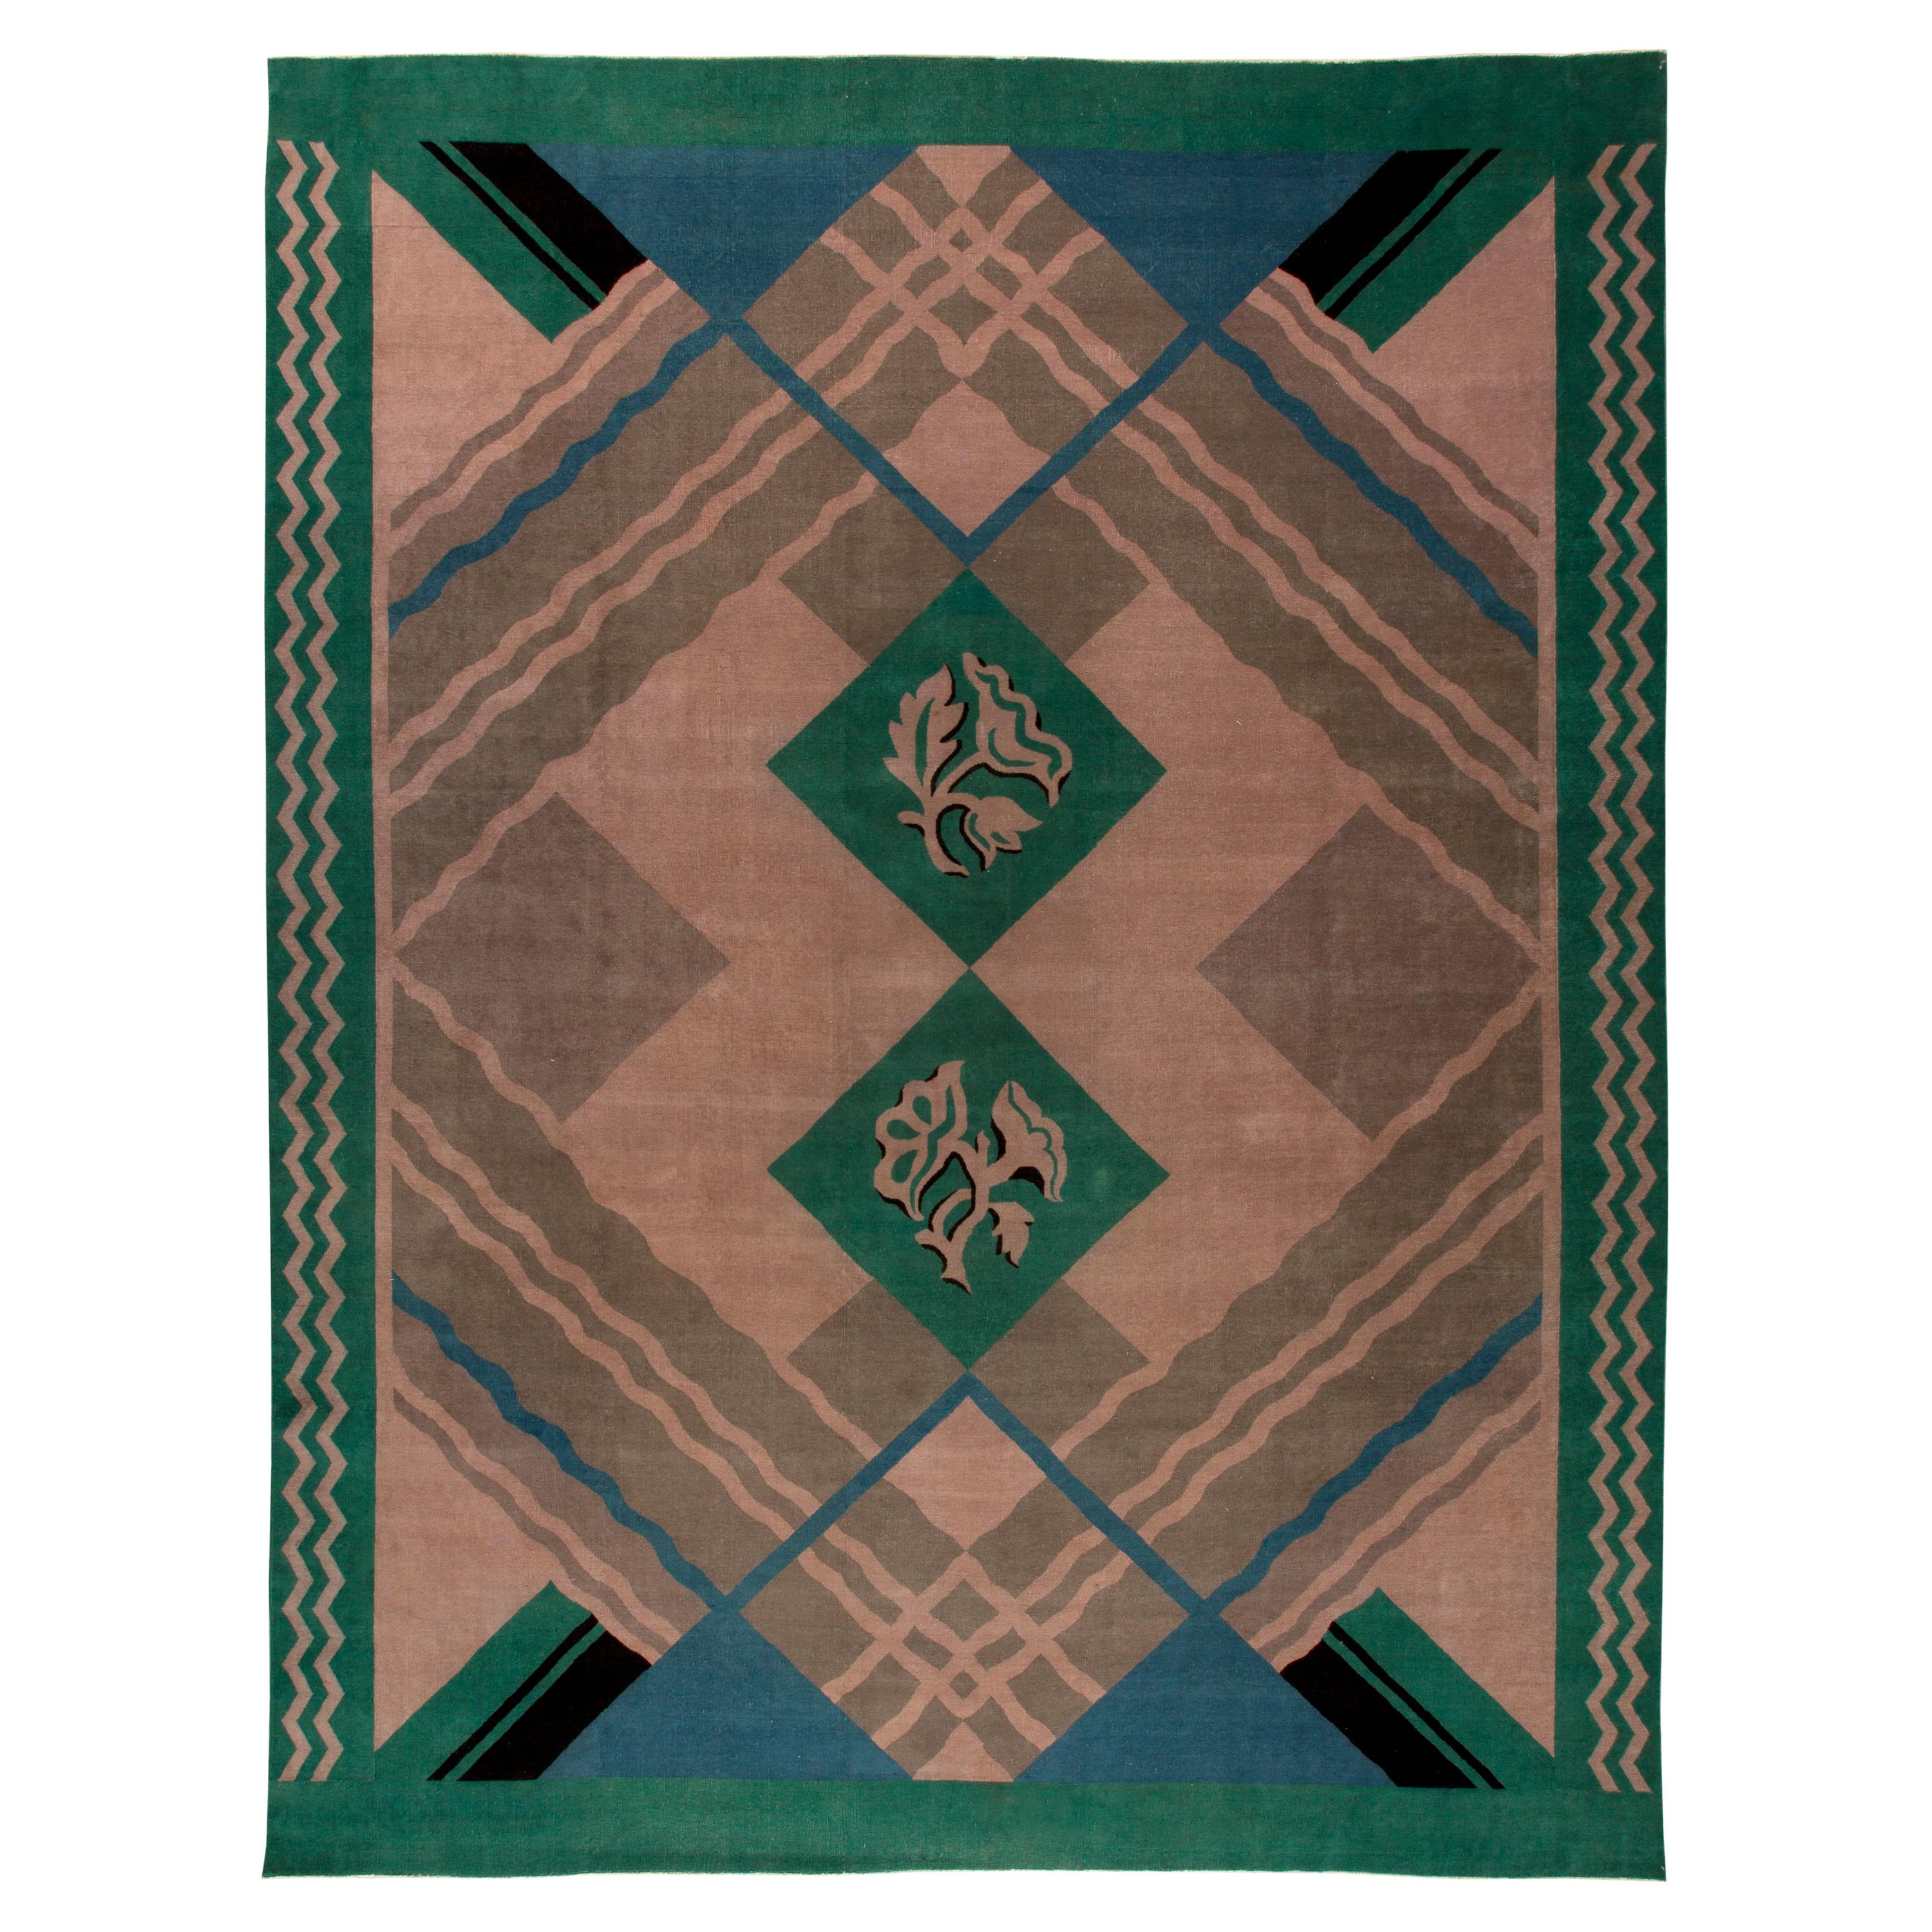 Vintage Chinese Art Deco Green Handmade Rug